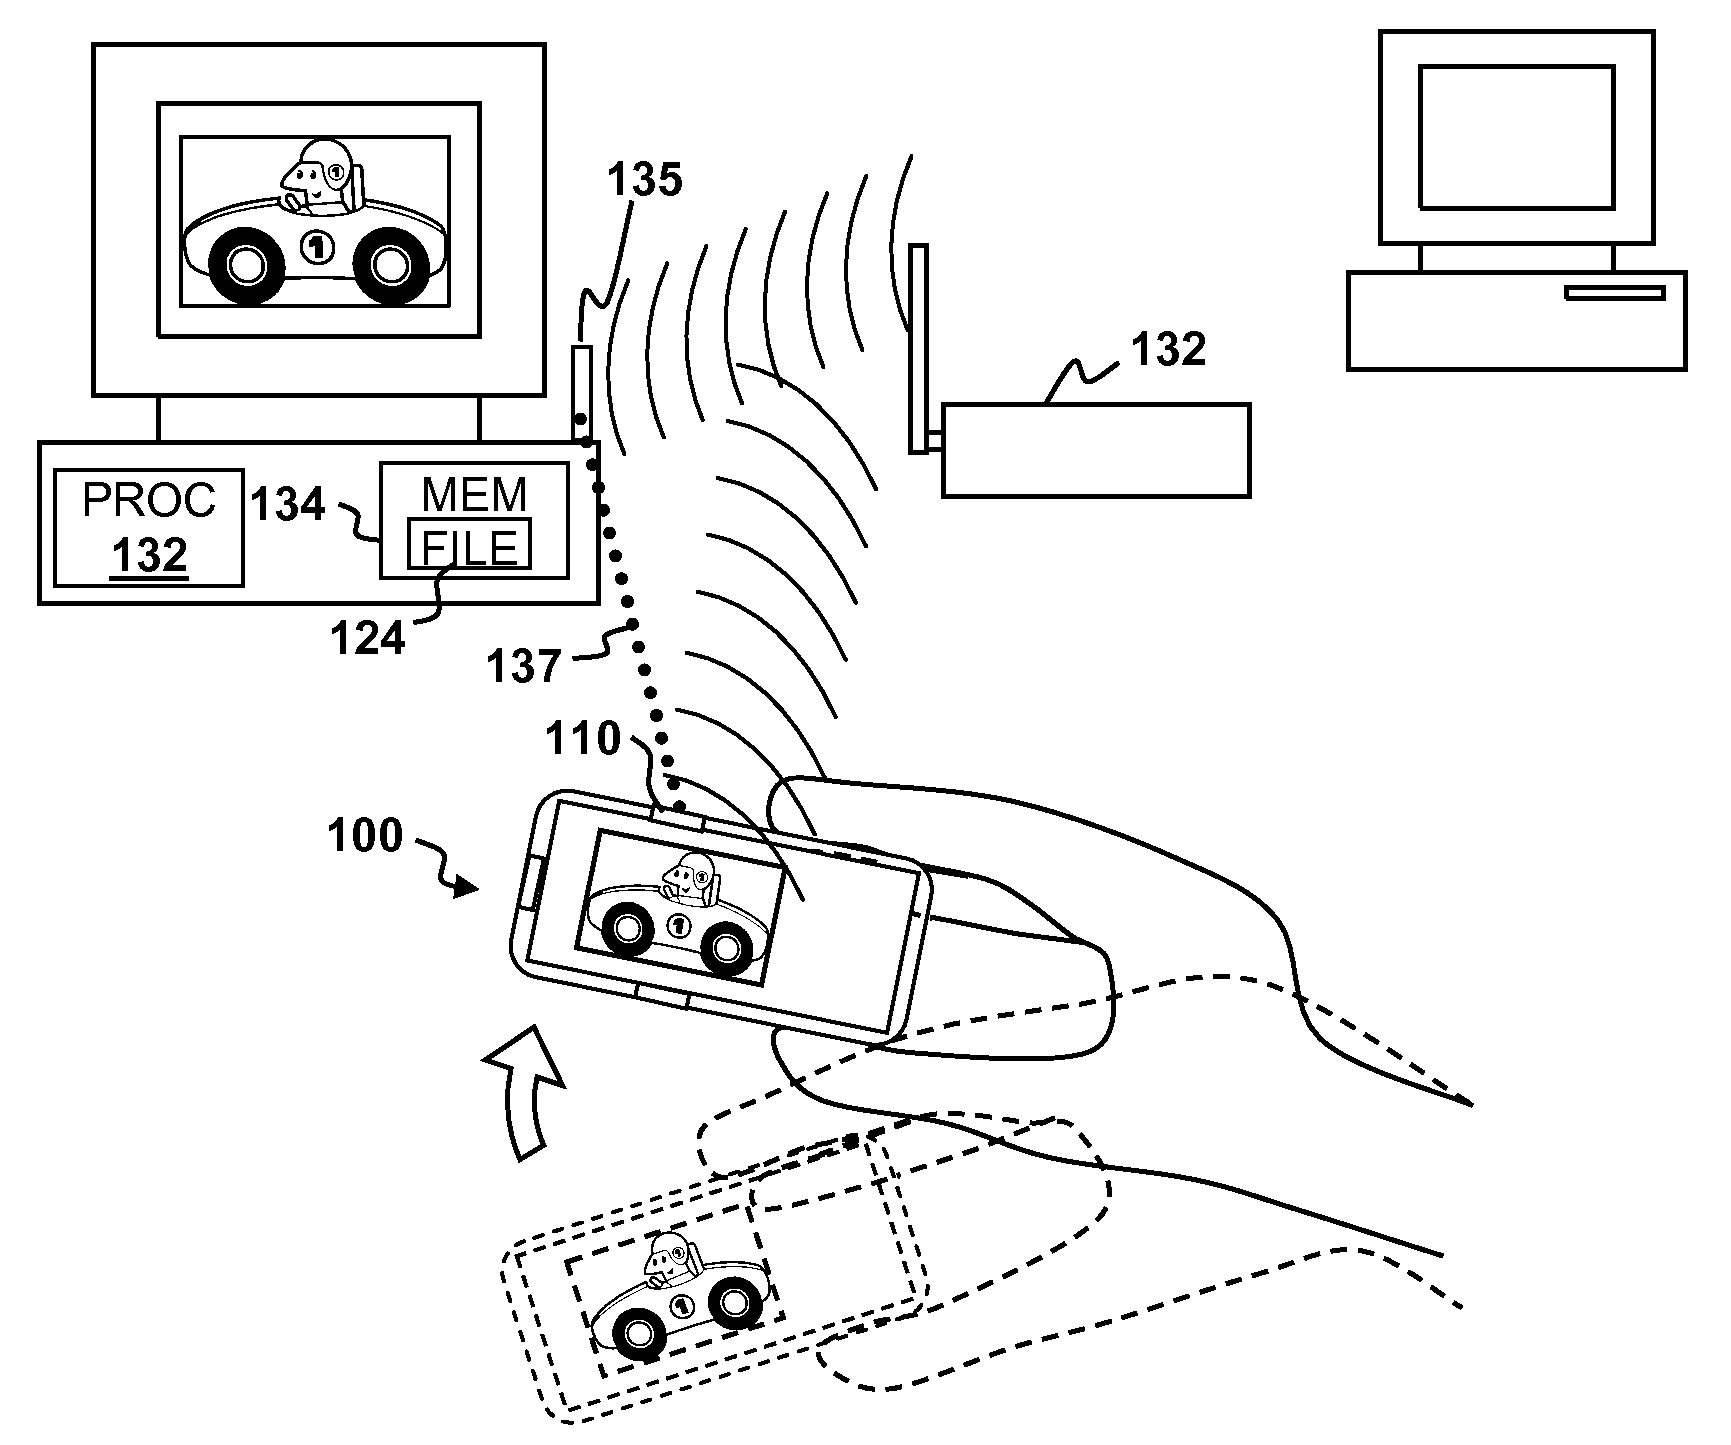 Data transfer using hand-held device